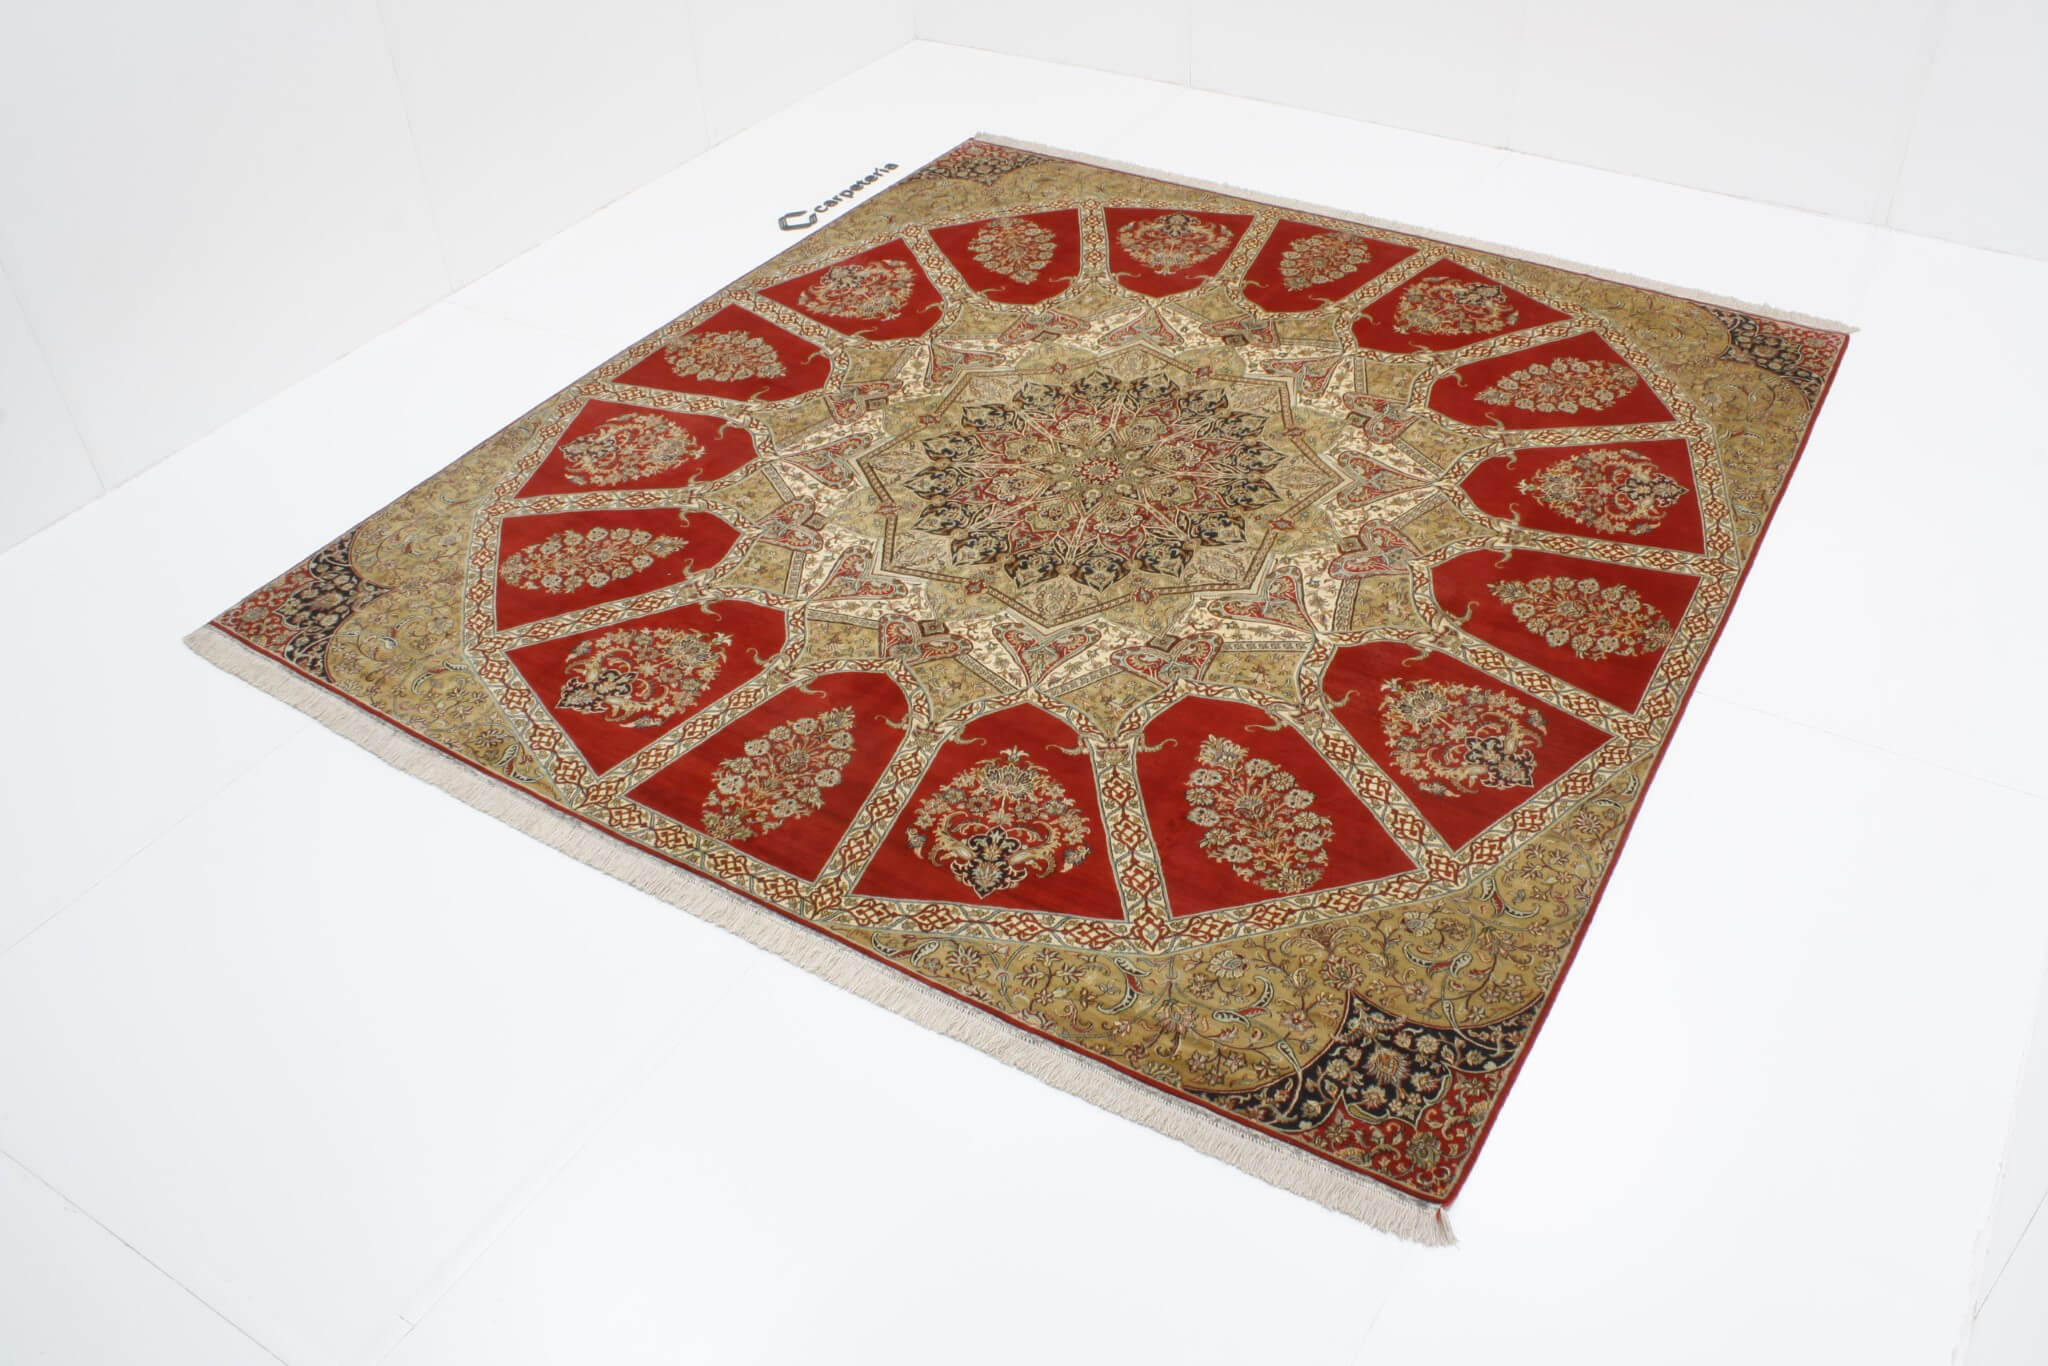 Orientální koberec Kashmir Silk/Silk Royal